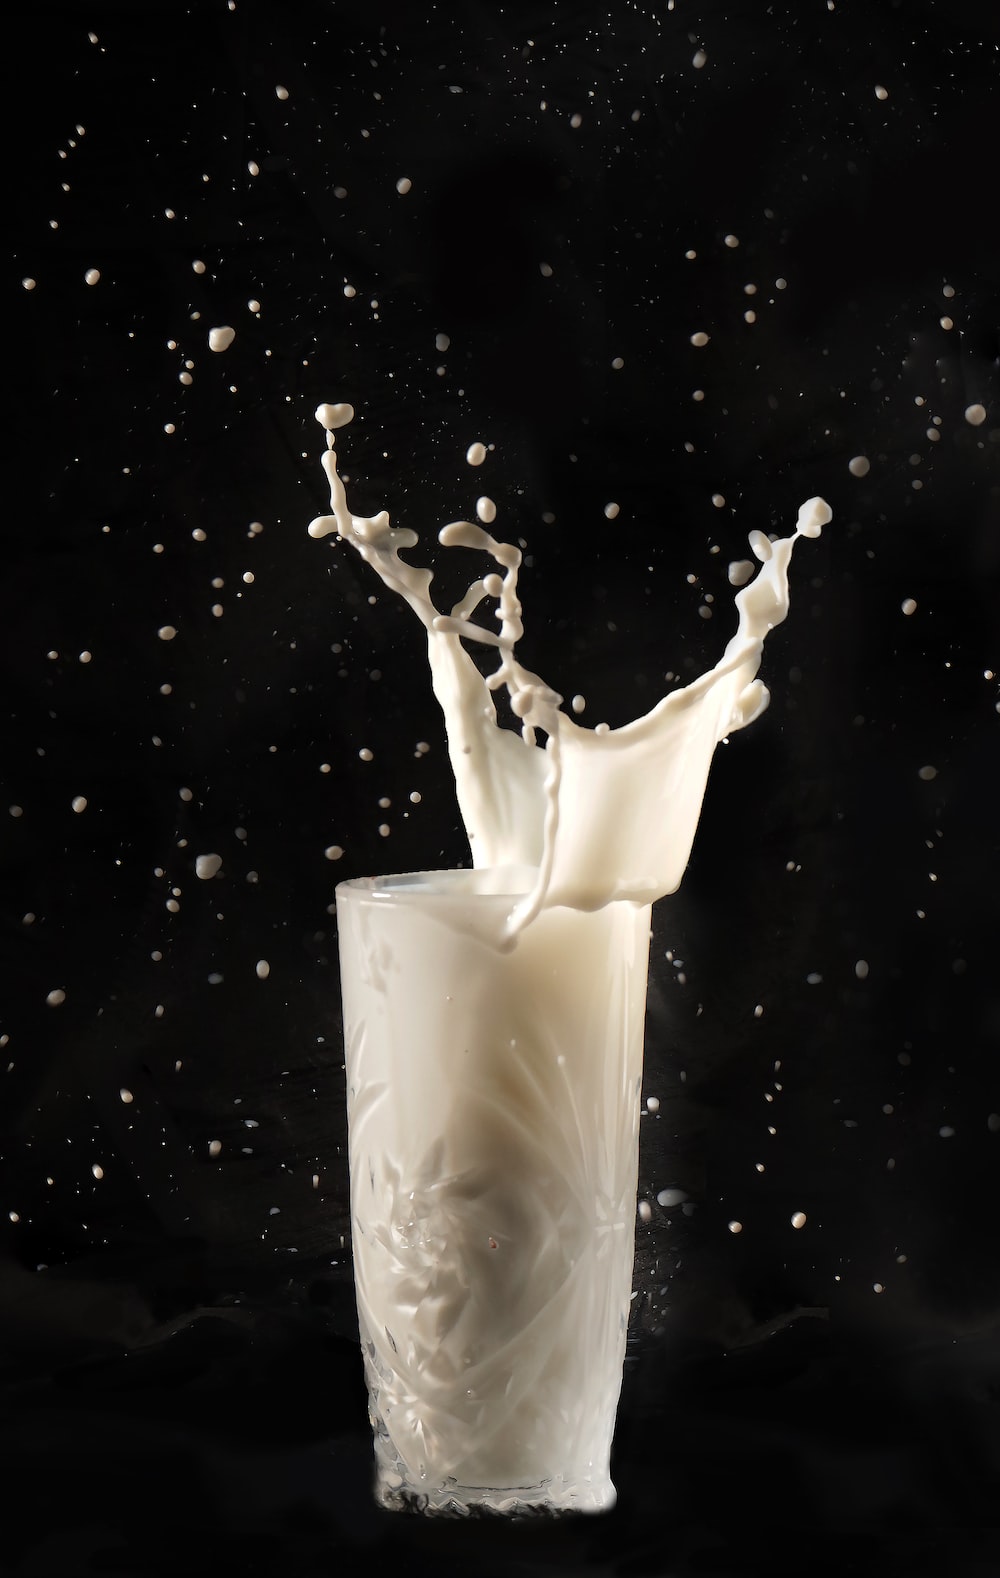 Milk Splash Picture. Download Free Image